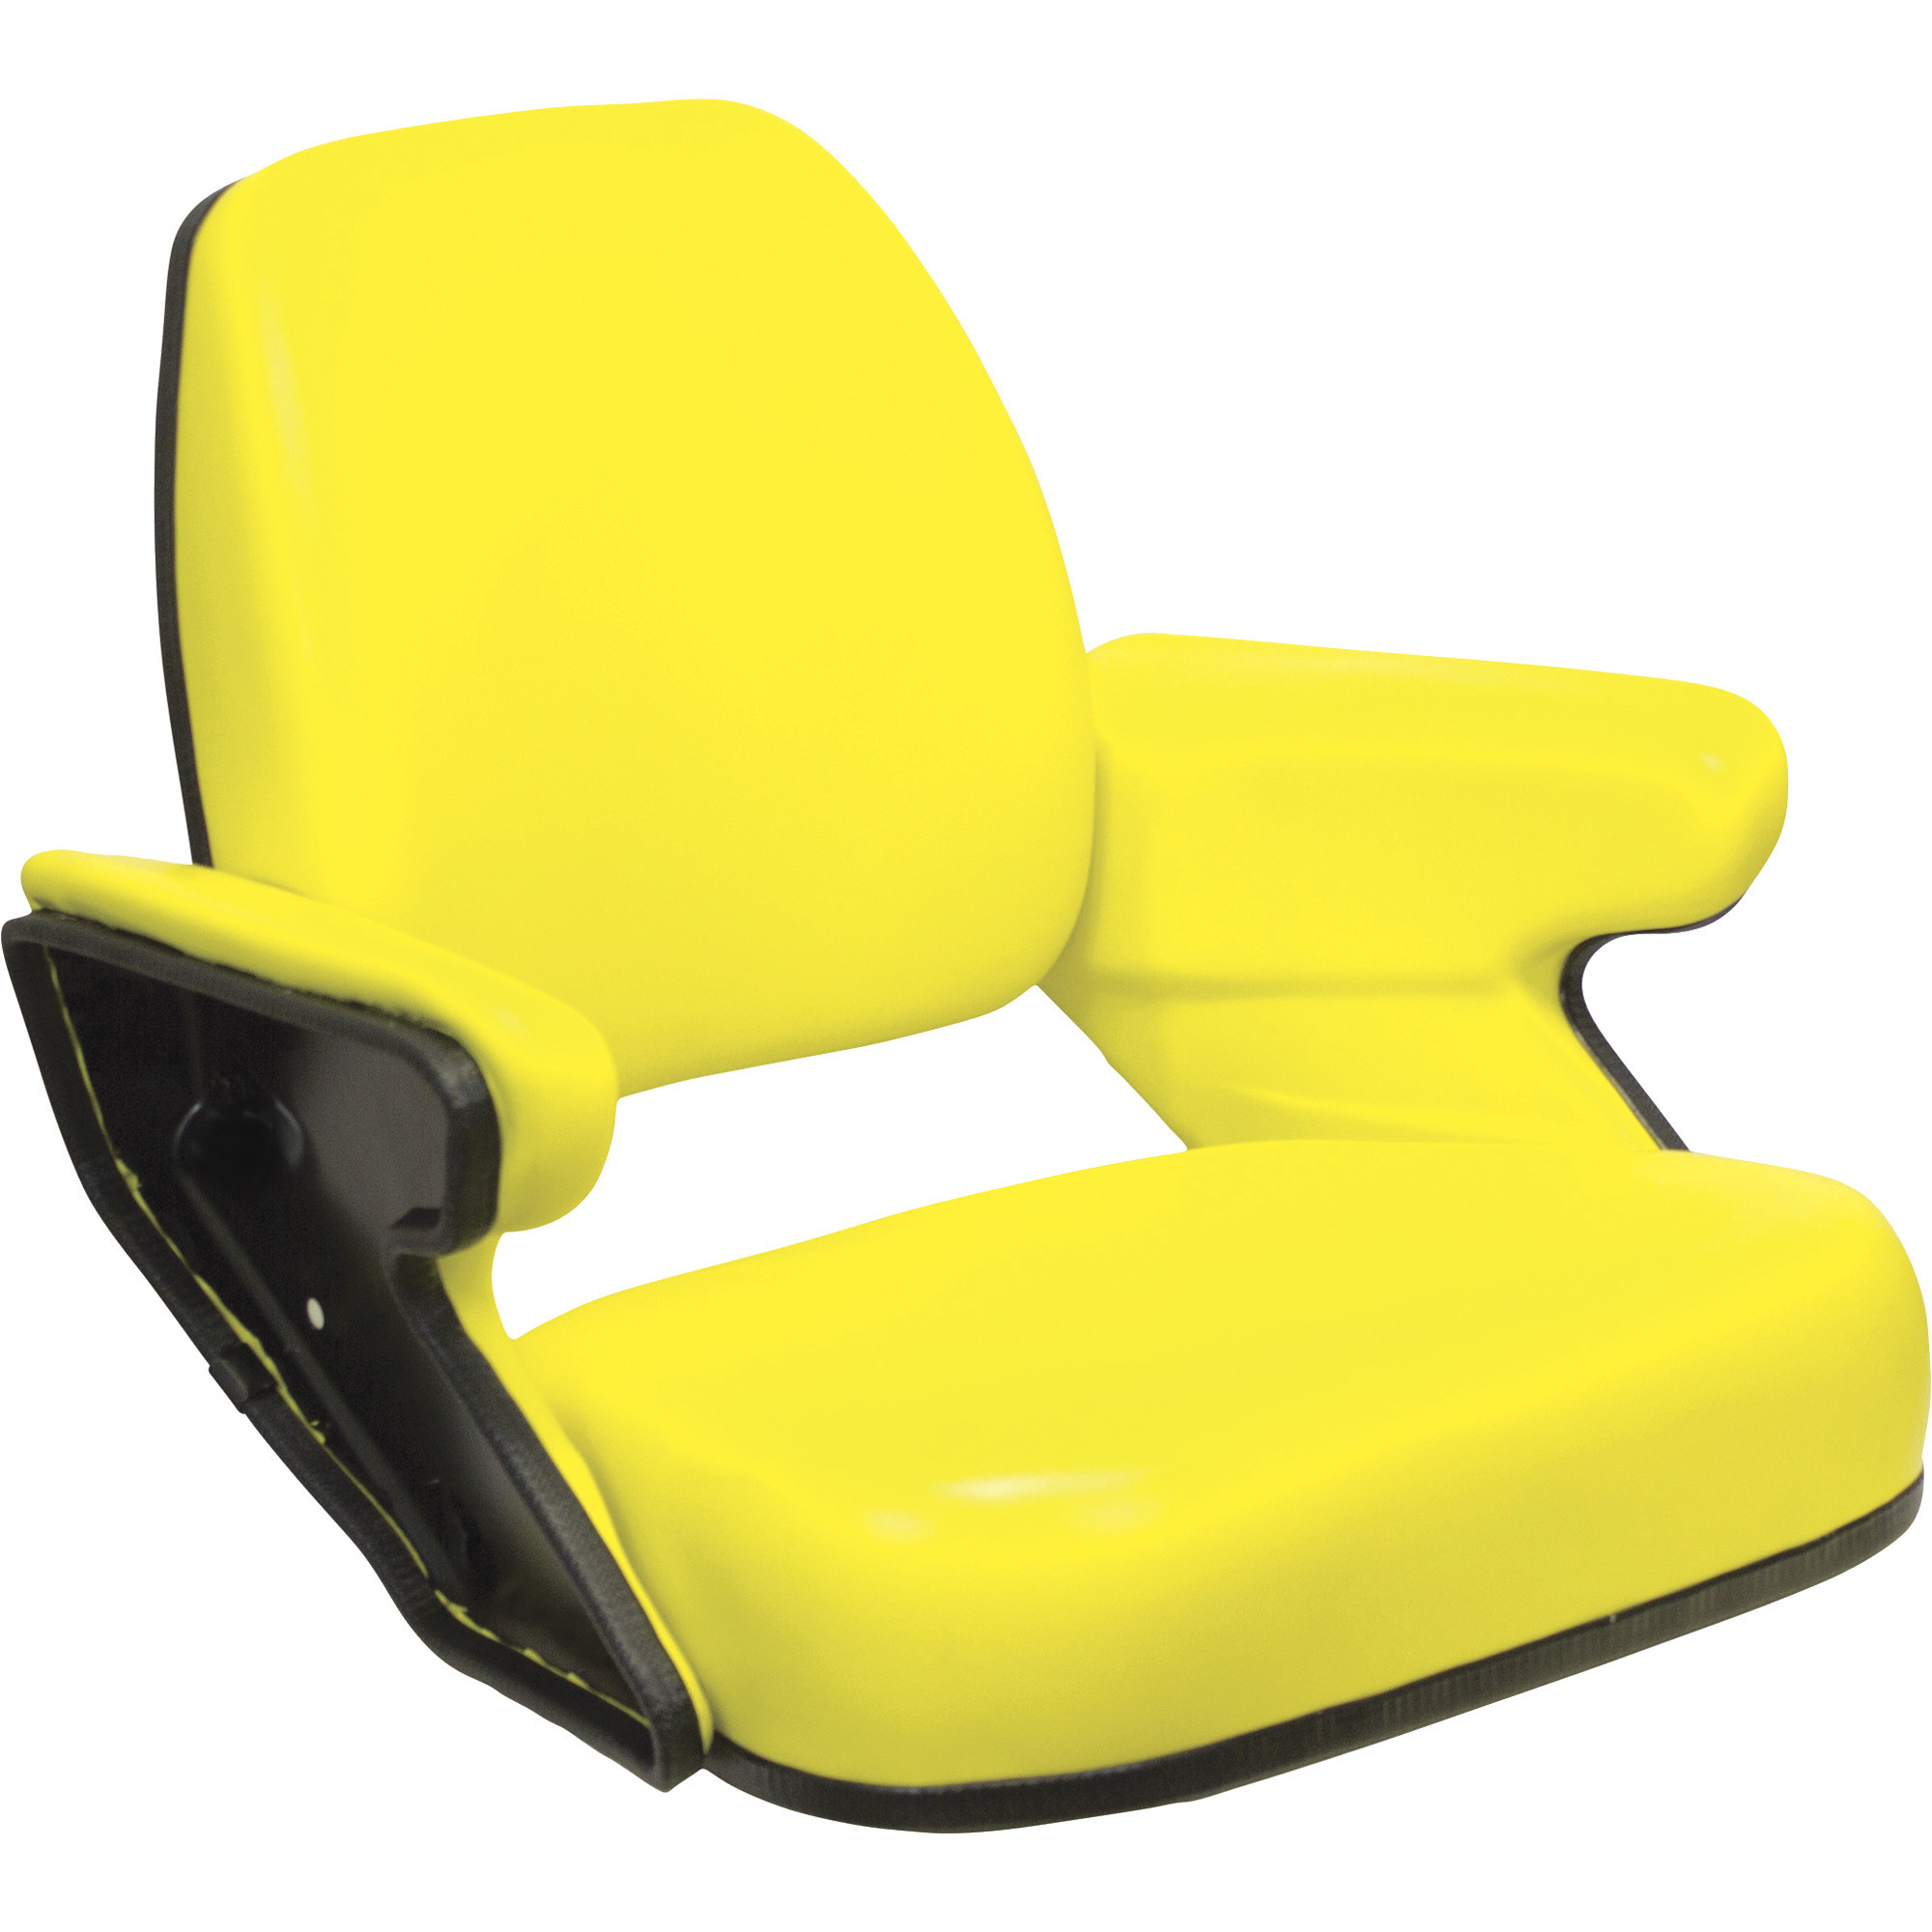 John Deere 2755 Seat Cushion Set, 2 Piece - AR65448-6